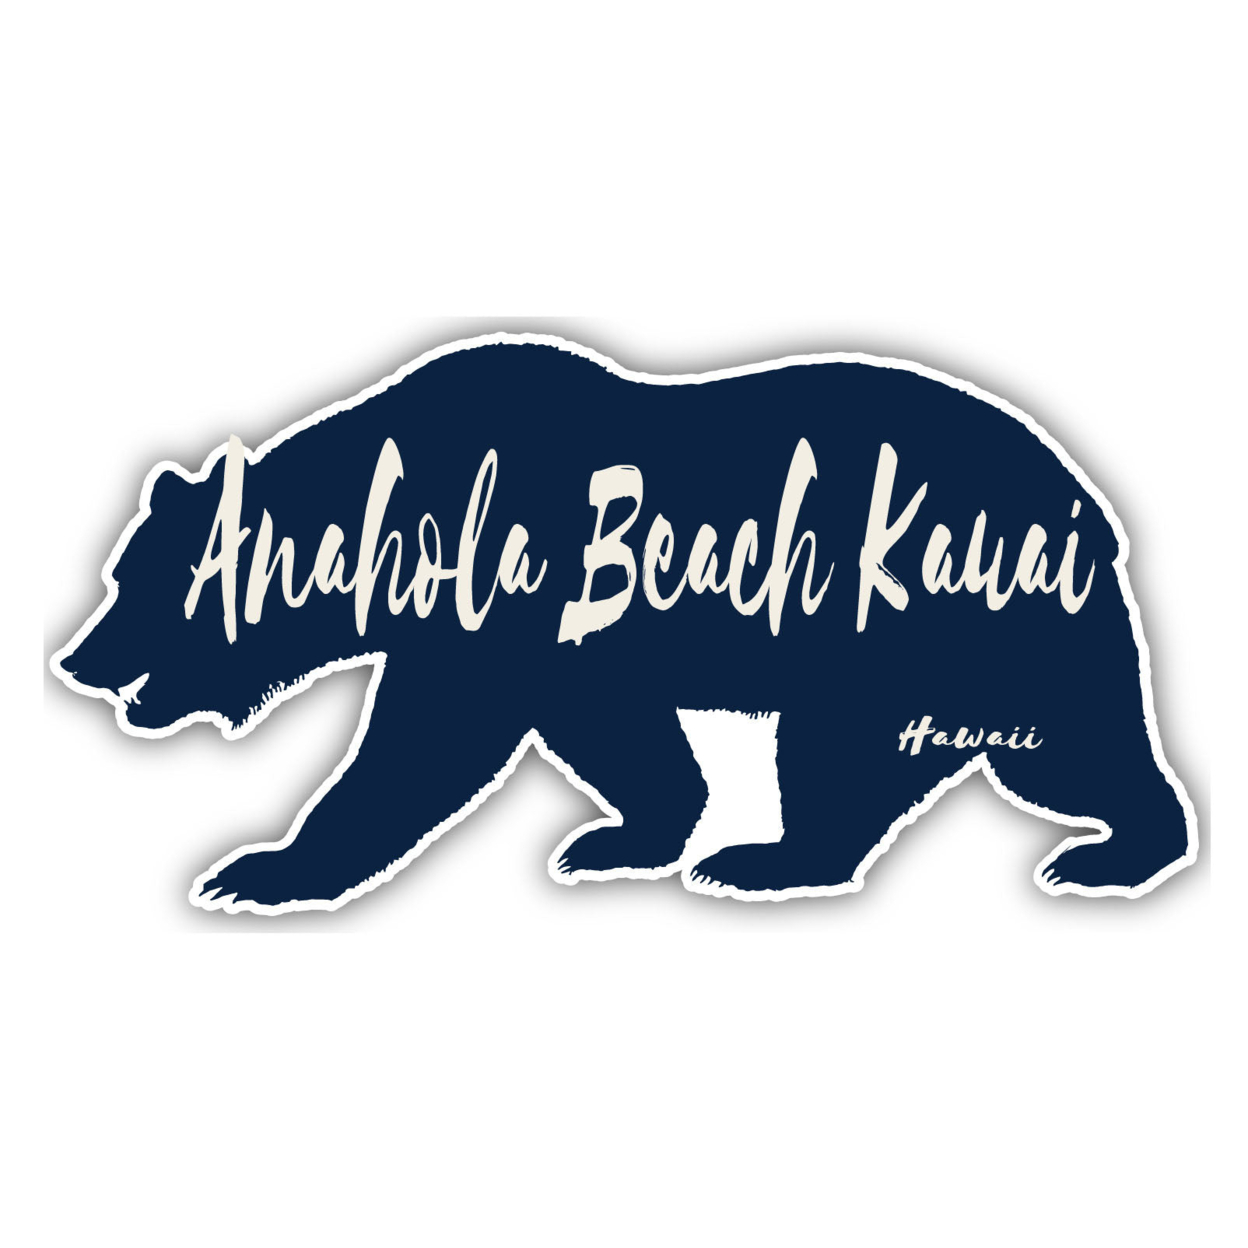 Anahola Beach Kauai Hawaii Souvenir Decorative Stickers (Choose Theme And Size) - 4-Pack, 6-Inch, Bear